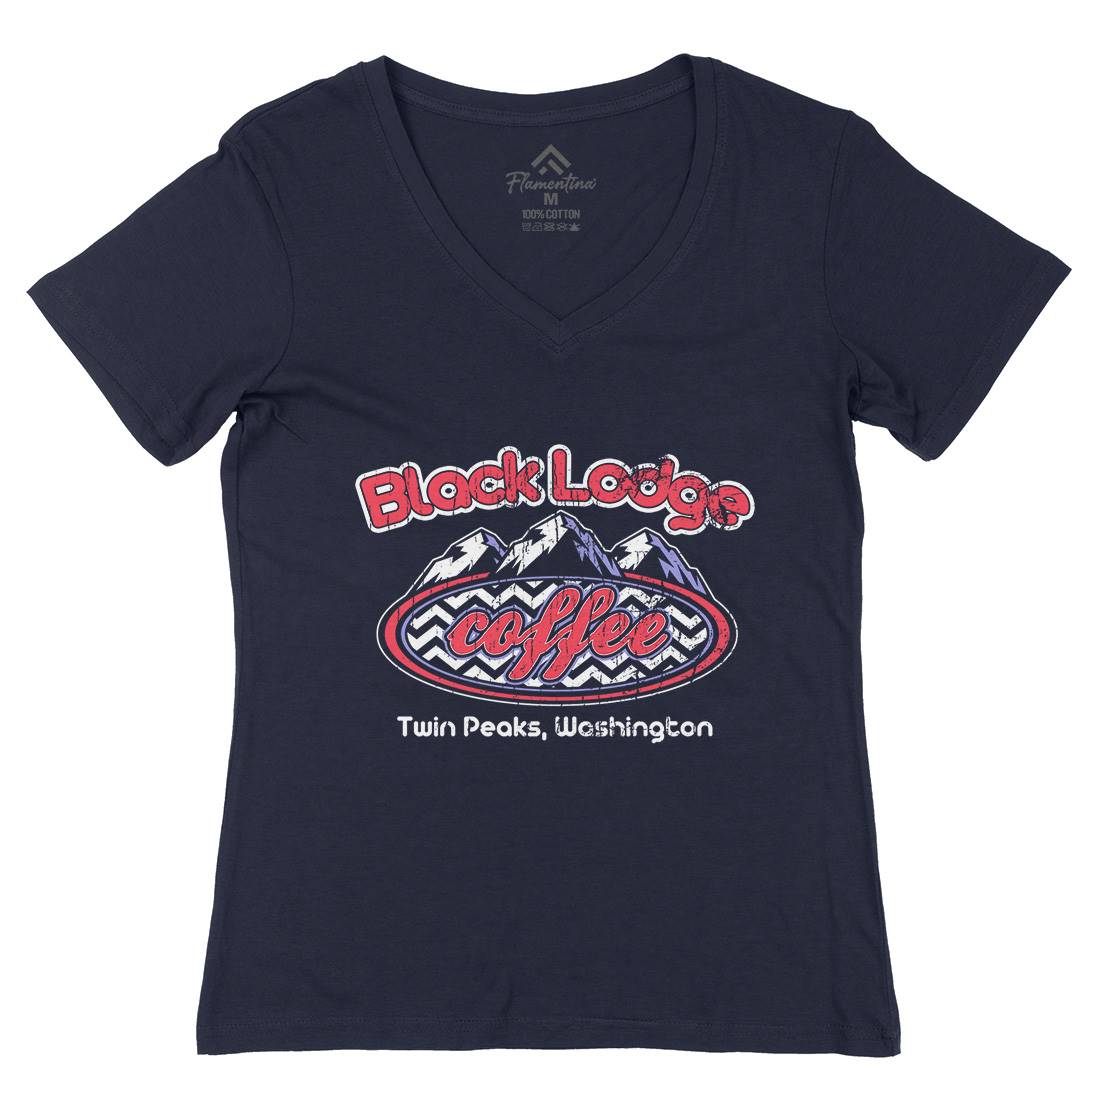 Black Lodge Womens Organic V-Neck T-Shirt Horror D386